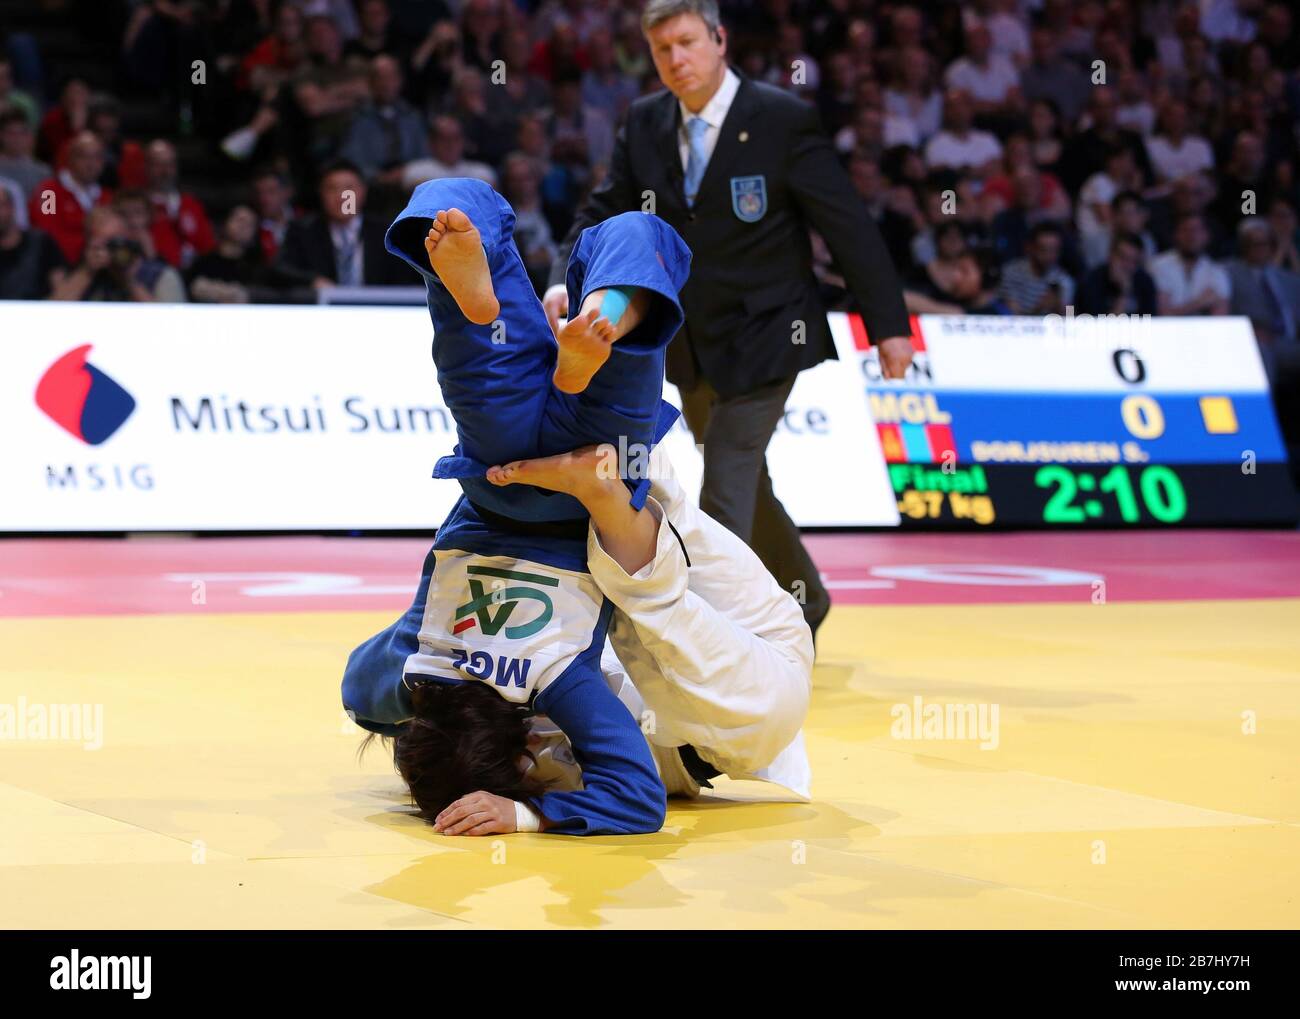 Paris, France - 08th Feb, 2020: Christa Deguchi for Canada against Sumiya Dorjsuren for Mongolia, Women's -57 kg, Gold Medal Match (Credit: Mickael Chavet) Stock Photo